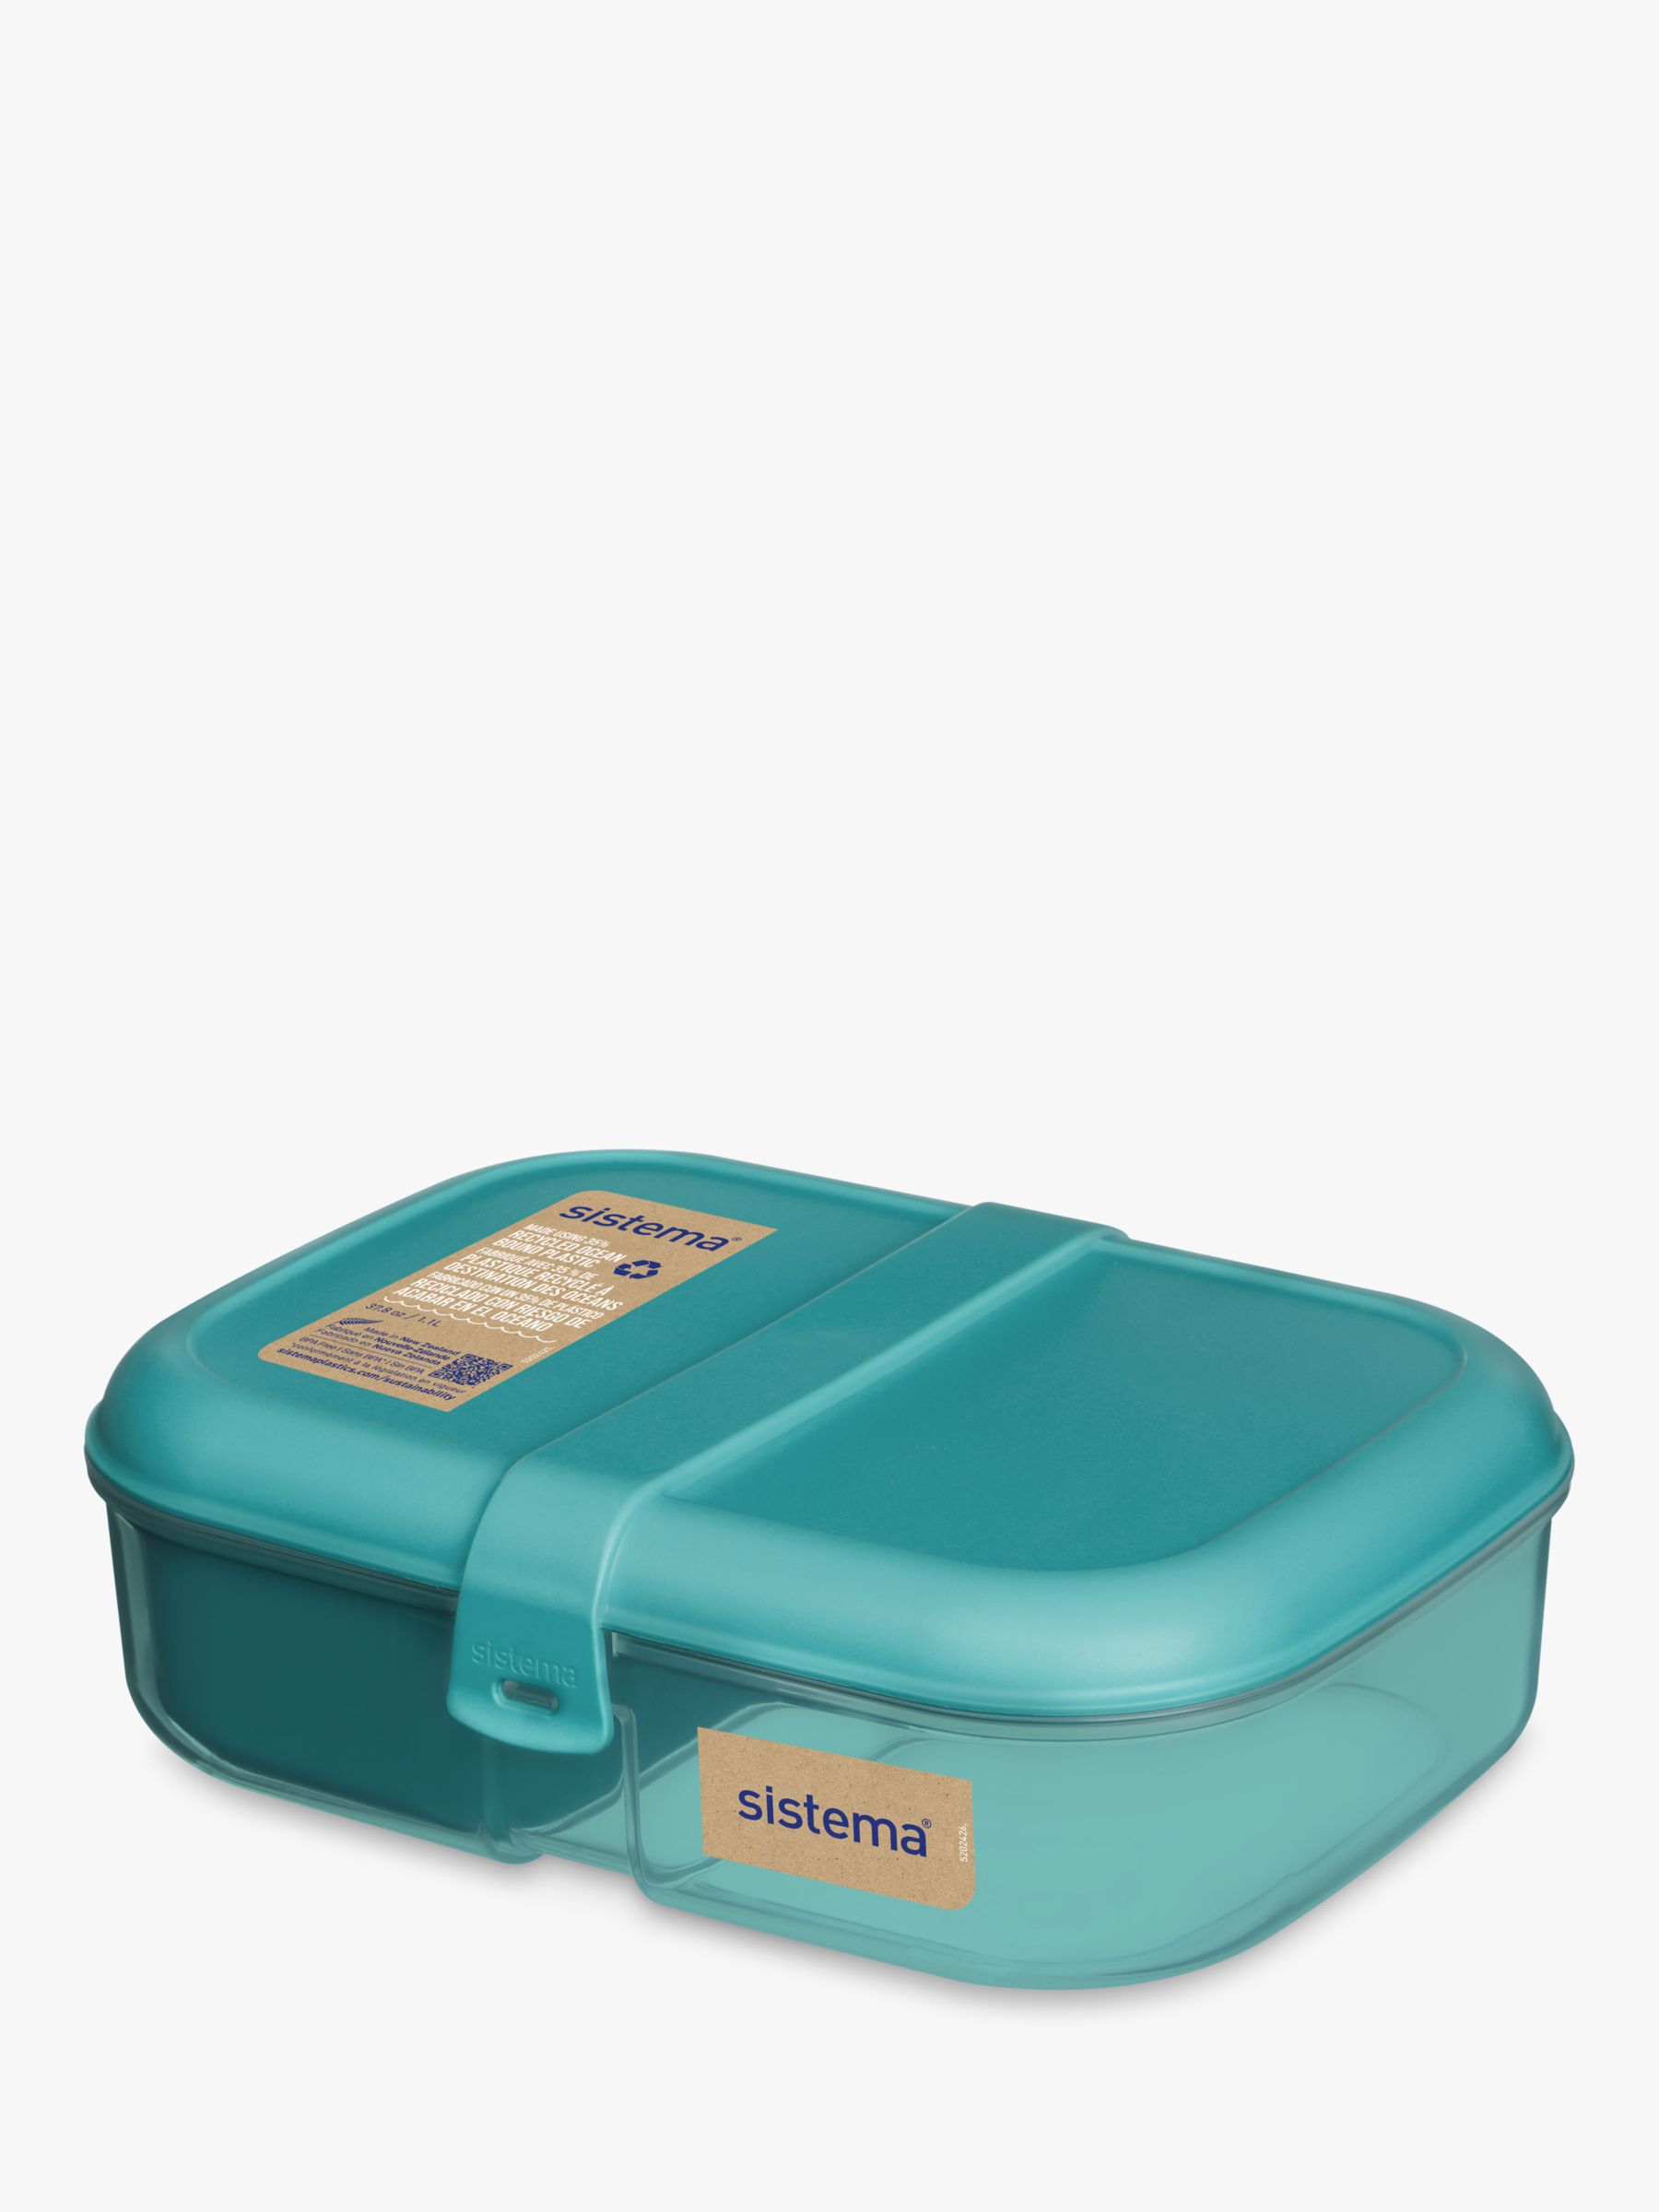 Sistema® Plastics: Lunch Boxes